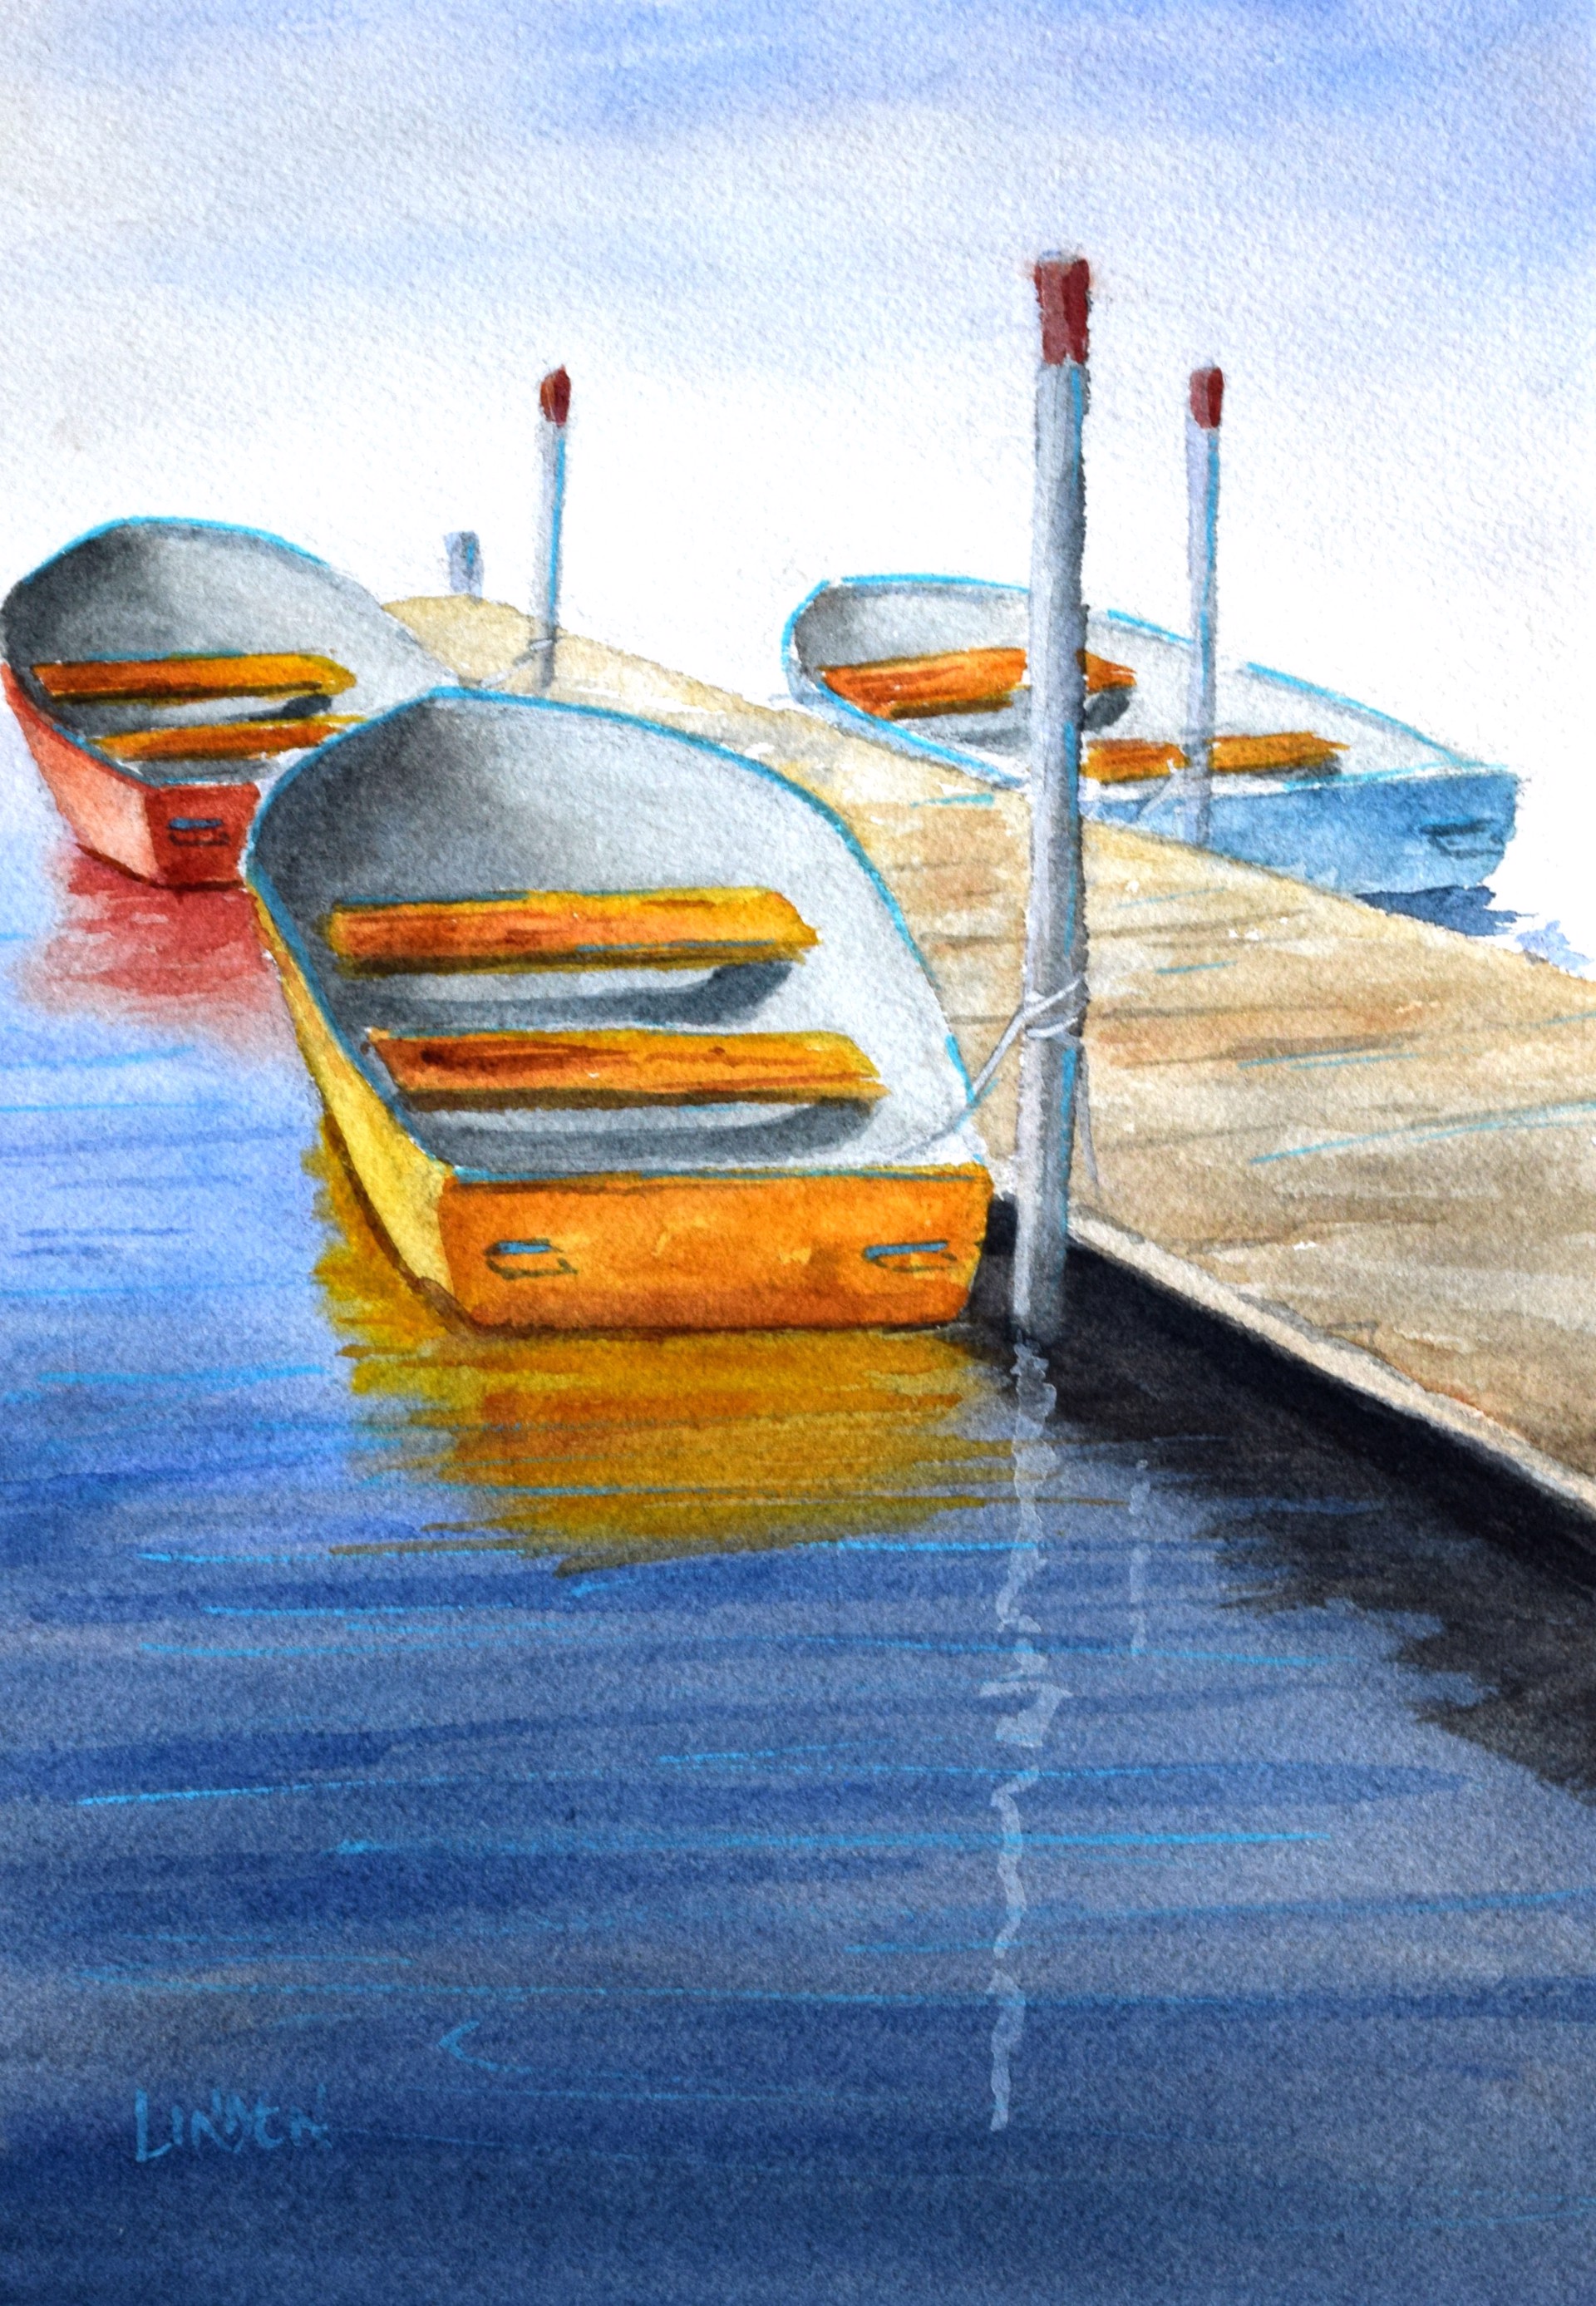 Ephraim Boats by Tom Linden